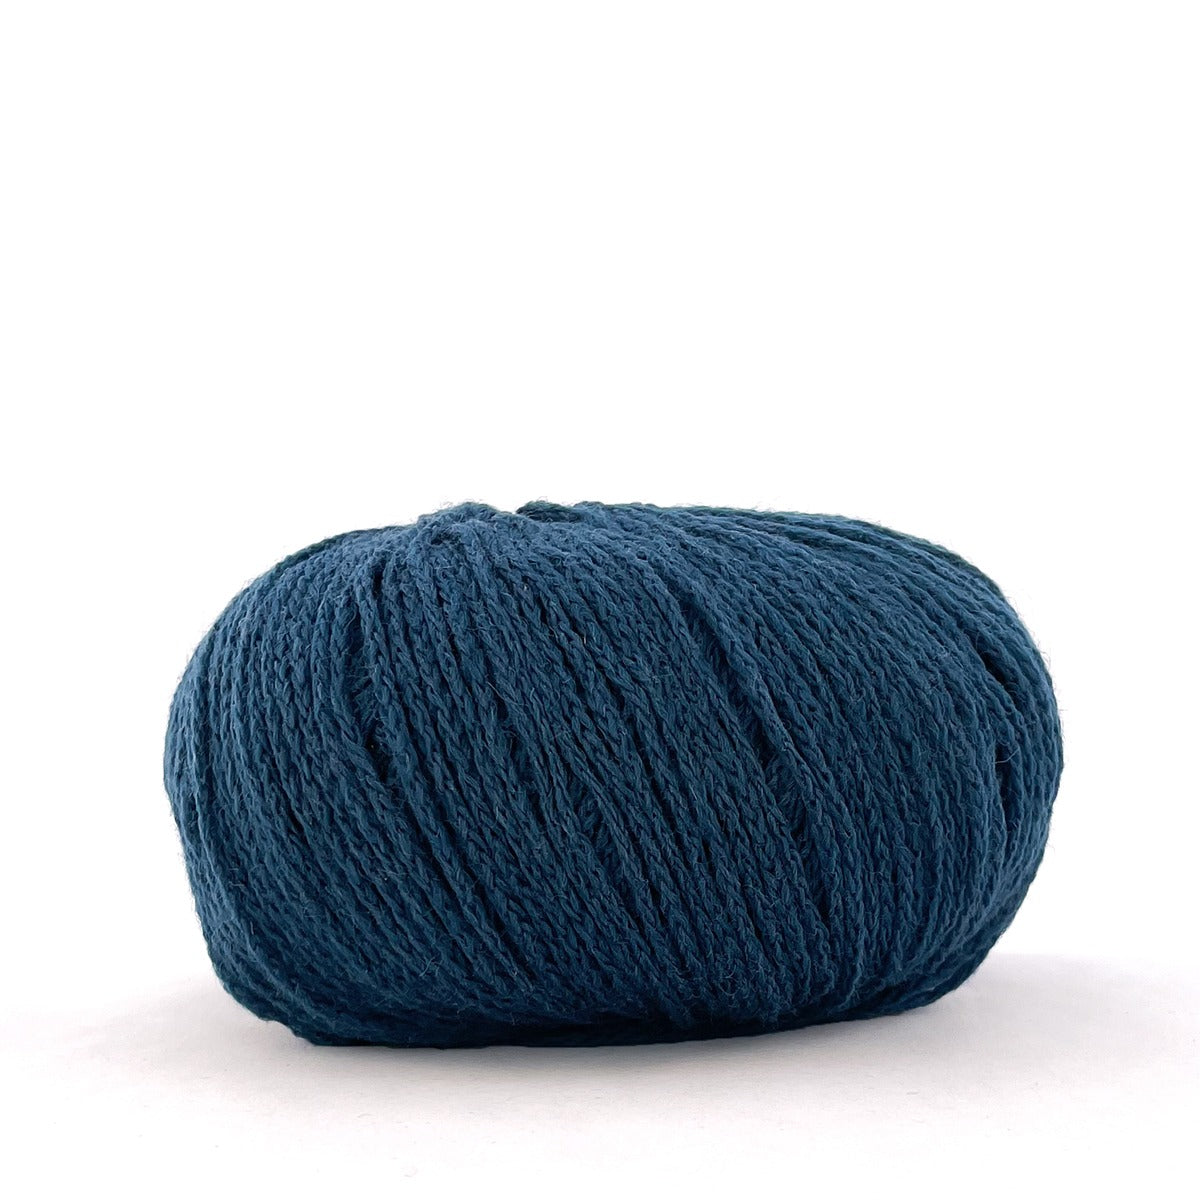 BC Garn Semilla Cable Collection yarn - Colour 22 Indigo